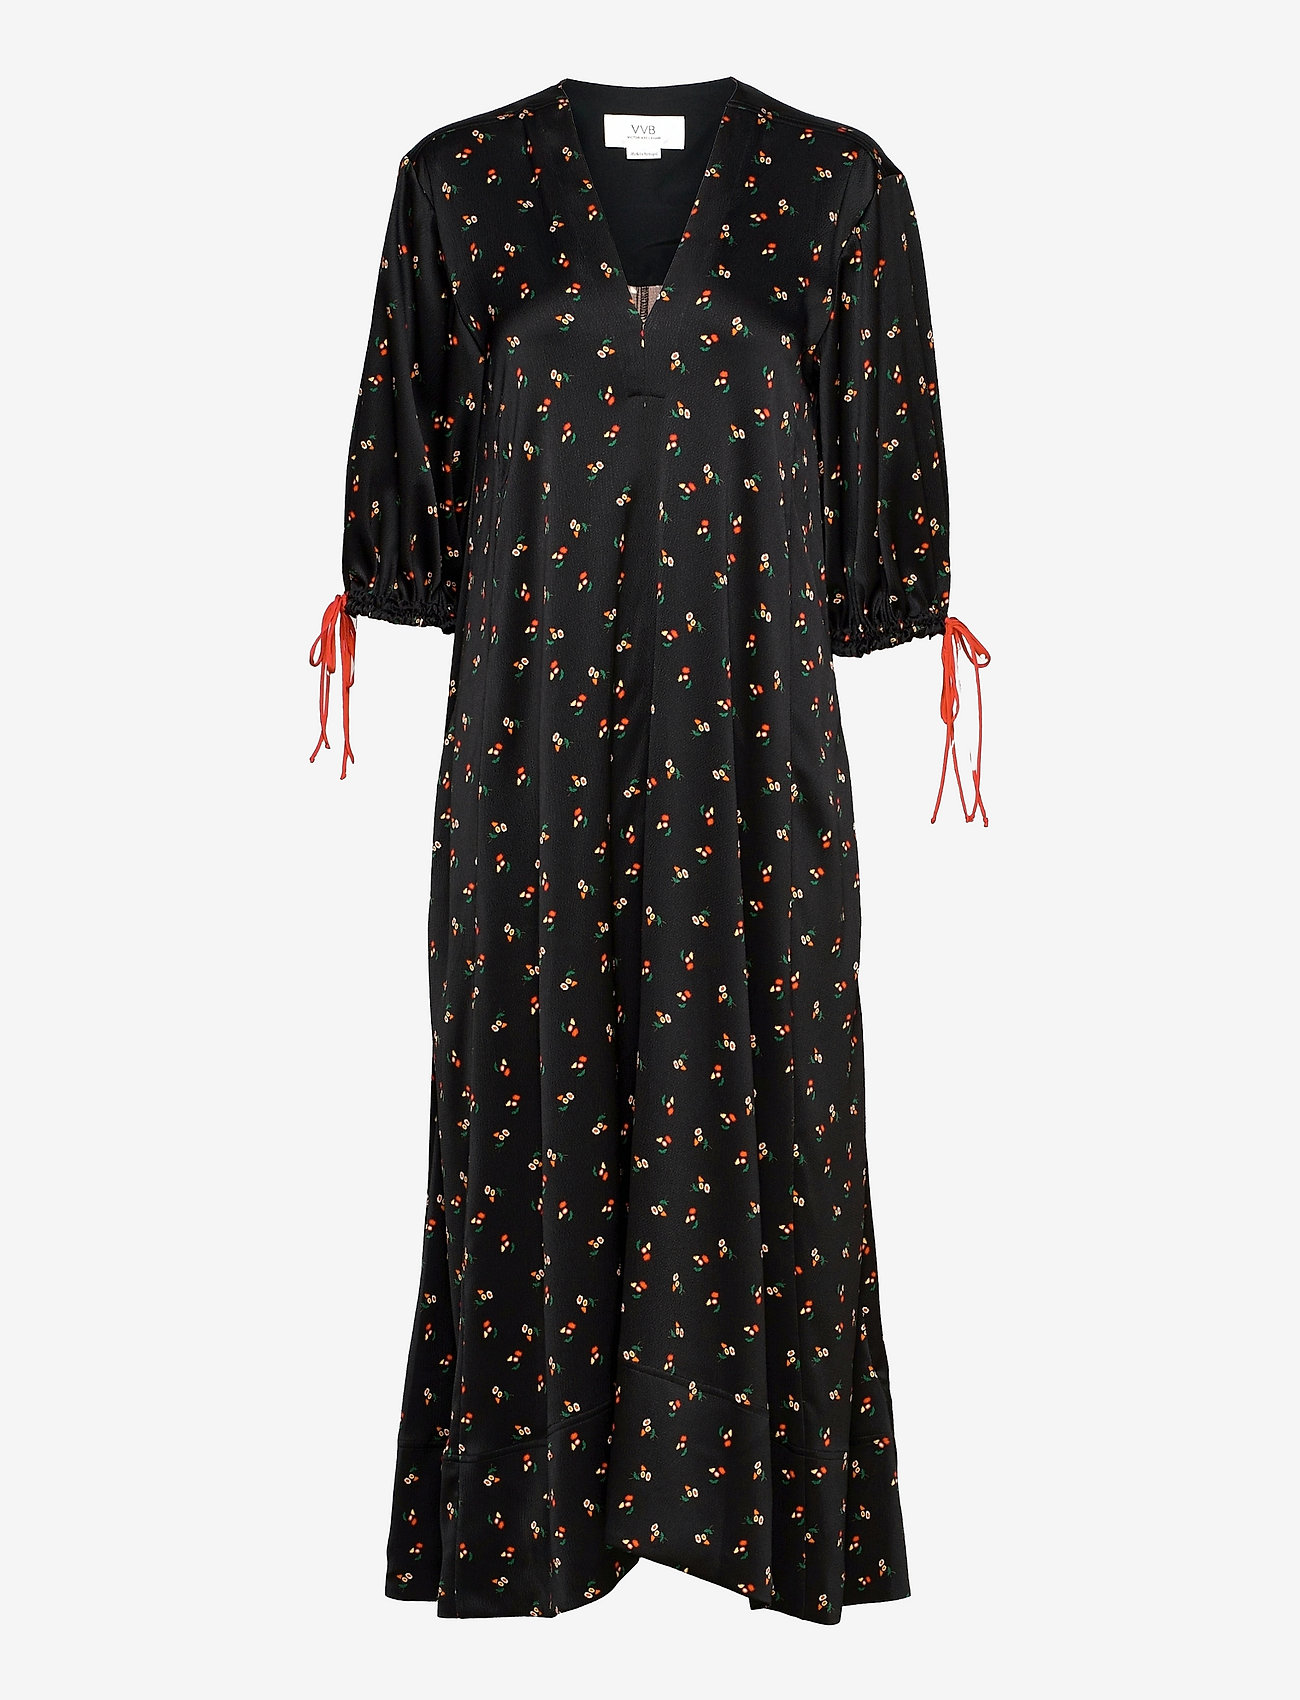 Victoria Beckham - PUFF SLEEVE MAXI DRESS - maxi sukienki - ditsy floral black/multi - 0